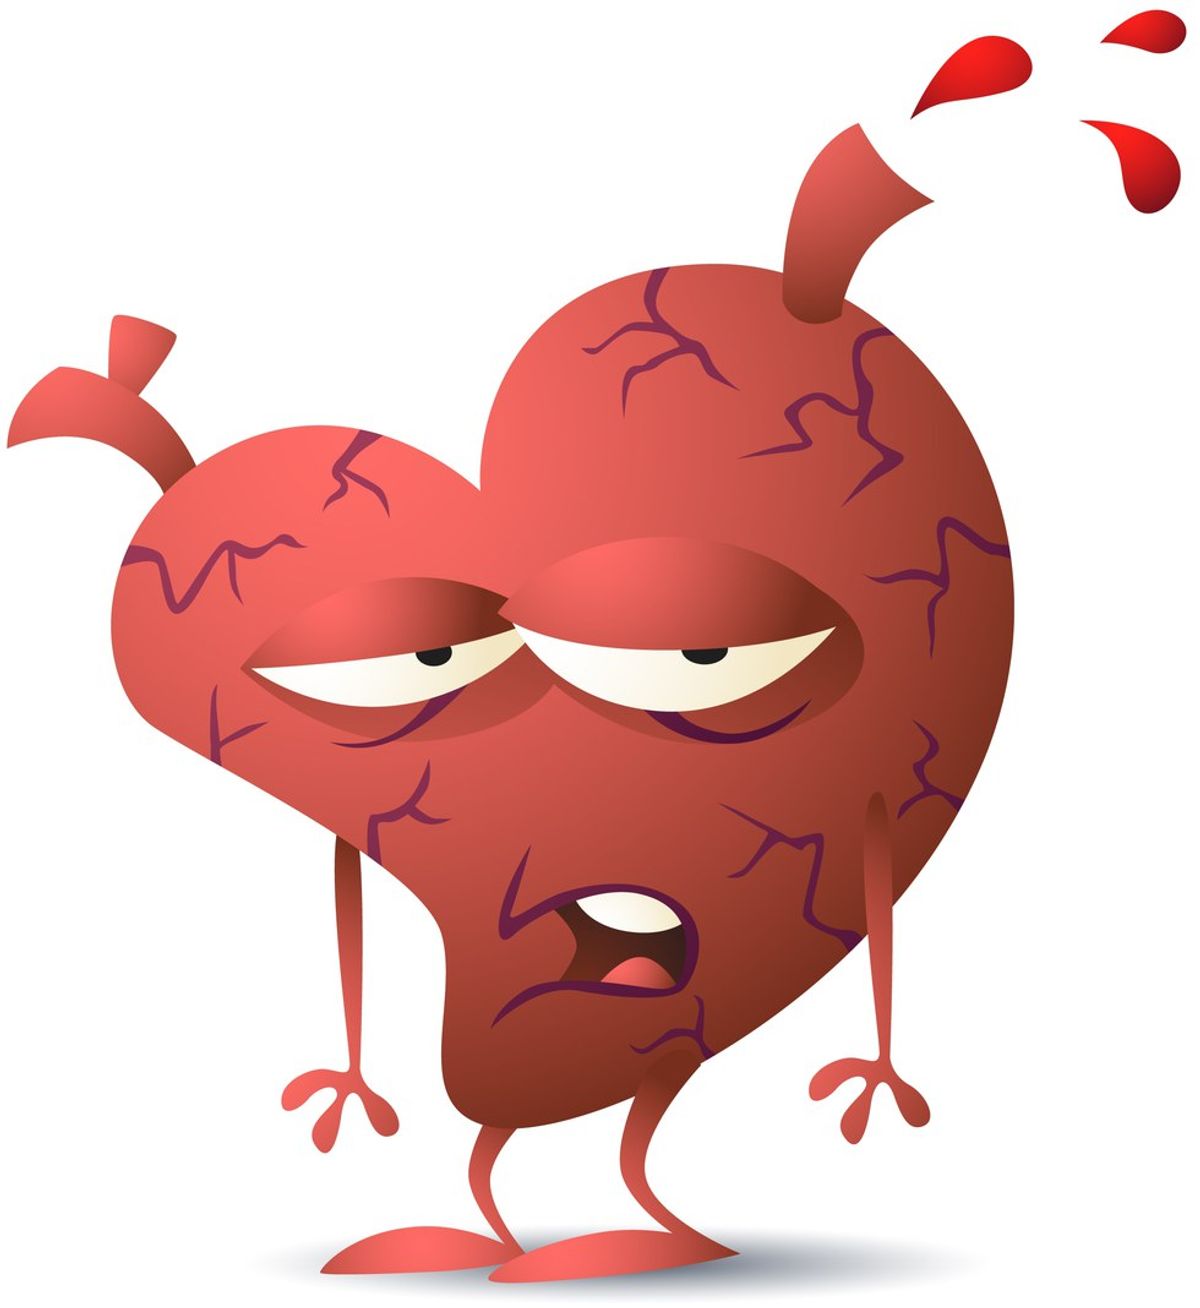 Heart Disease: A Common Killer